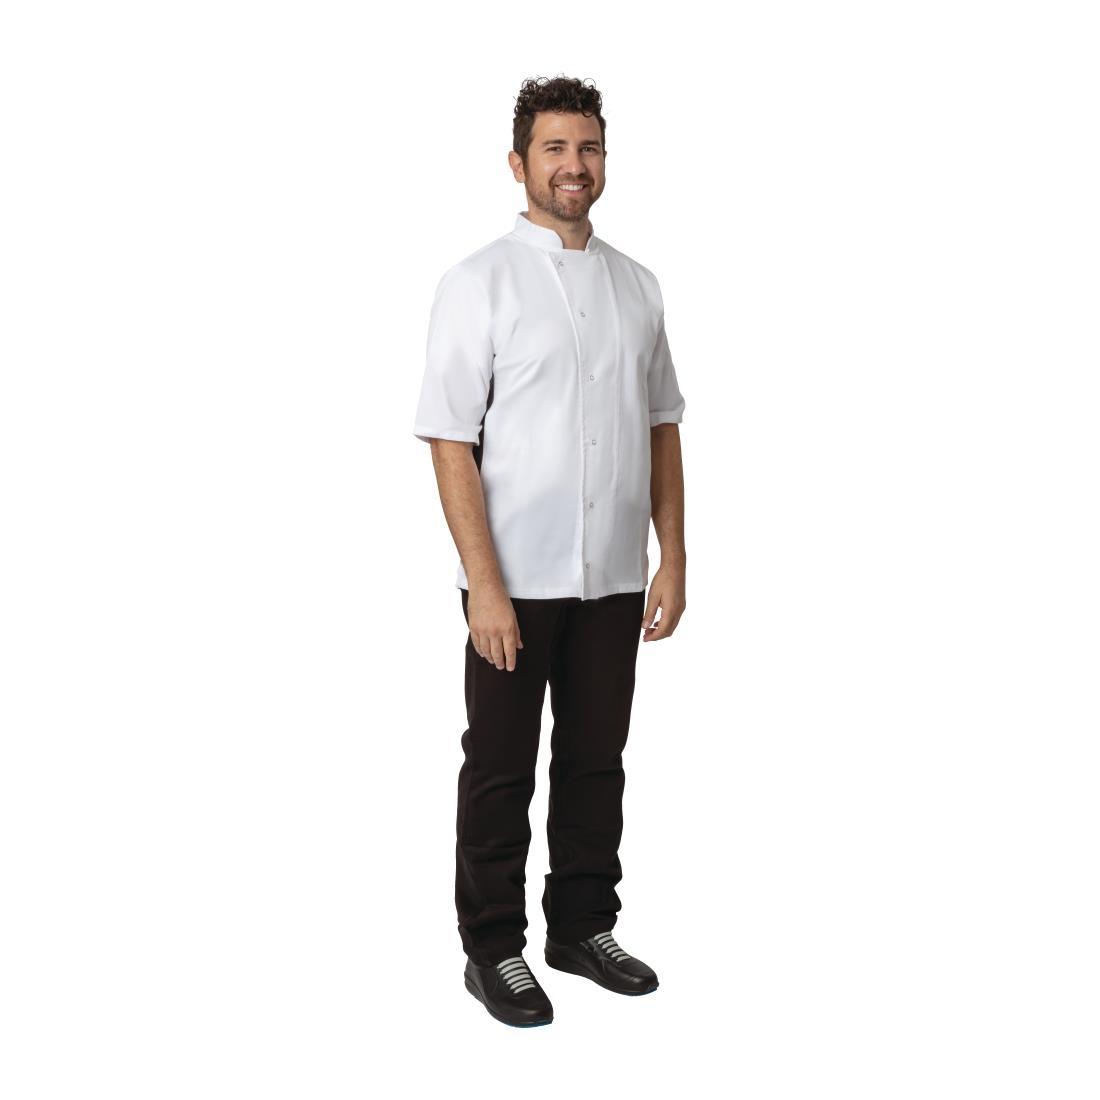 Whites Nevada Unisex Chefs Jacket Short Sleeve Black and White 2XL - A928-XXL  - 1